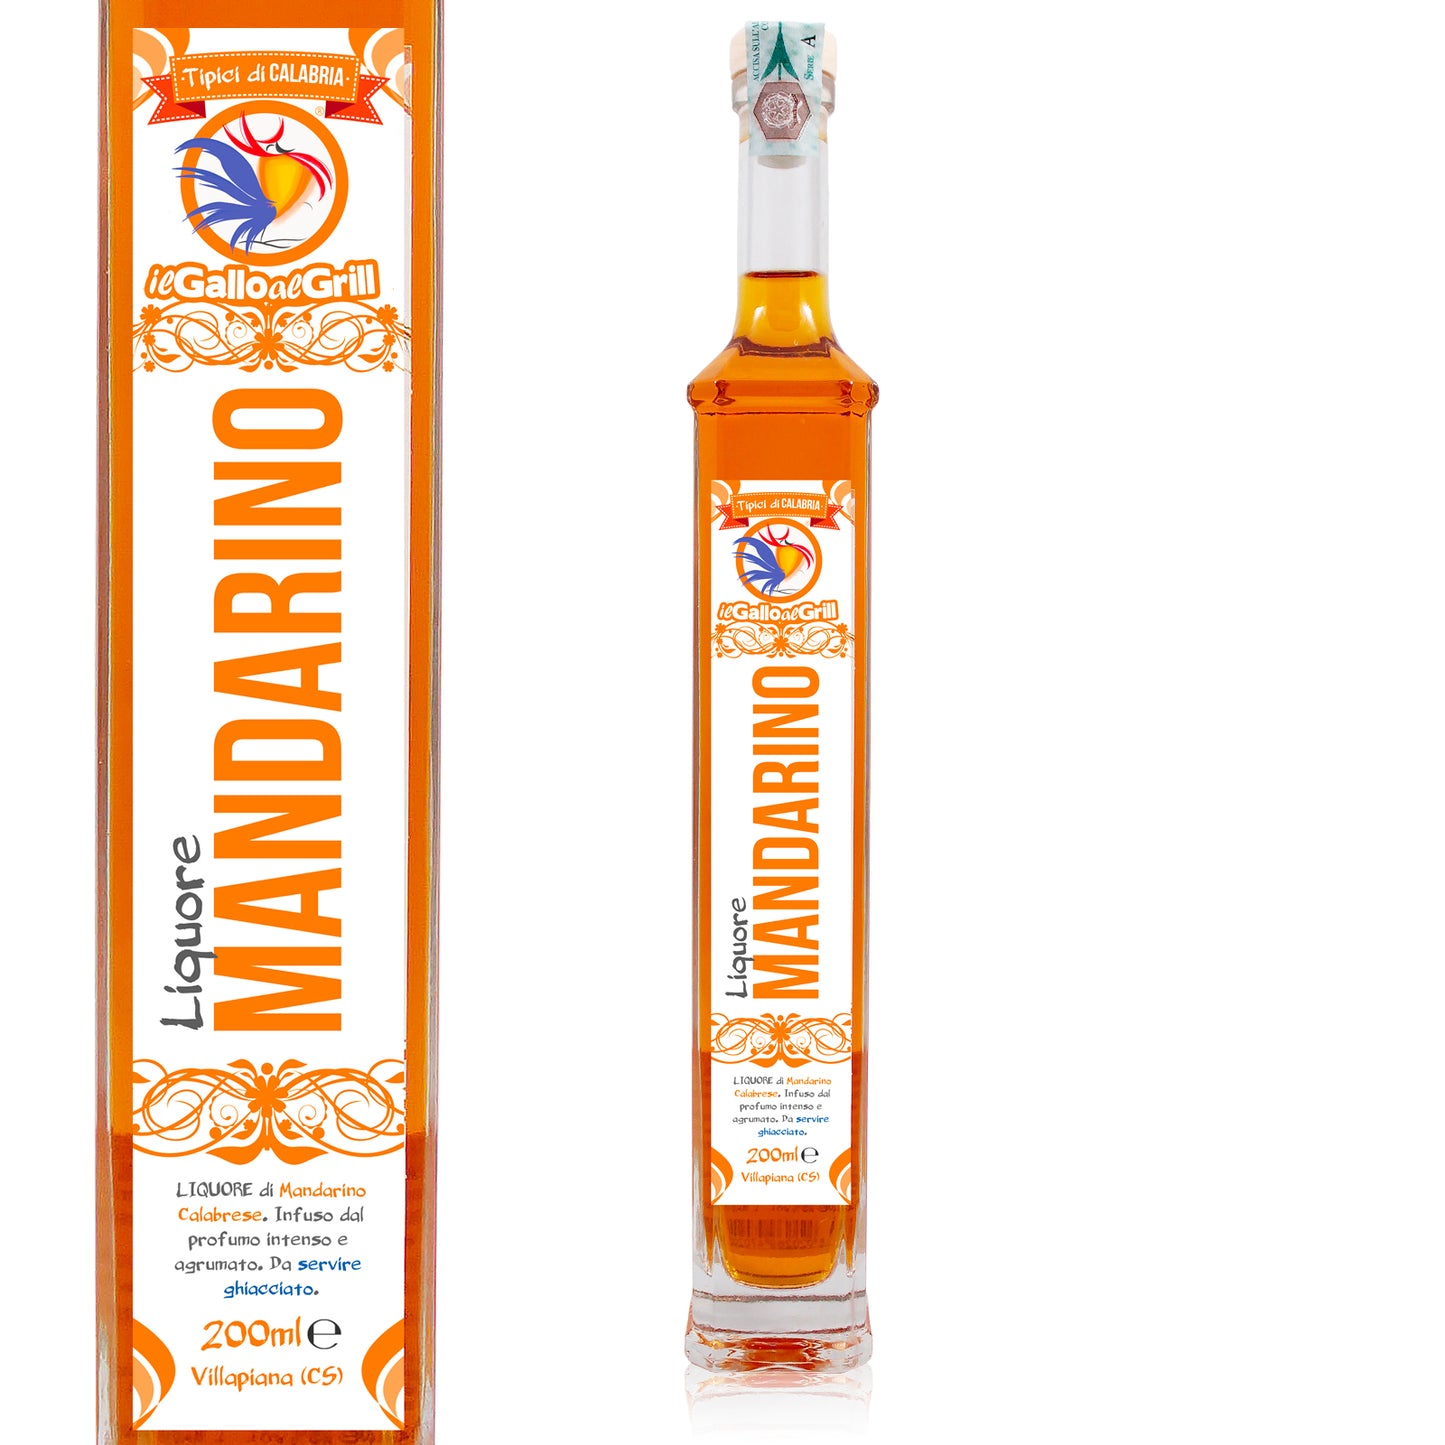 Liquore al mandarino Calabrese